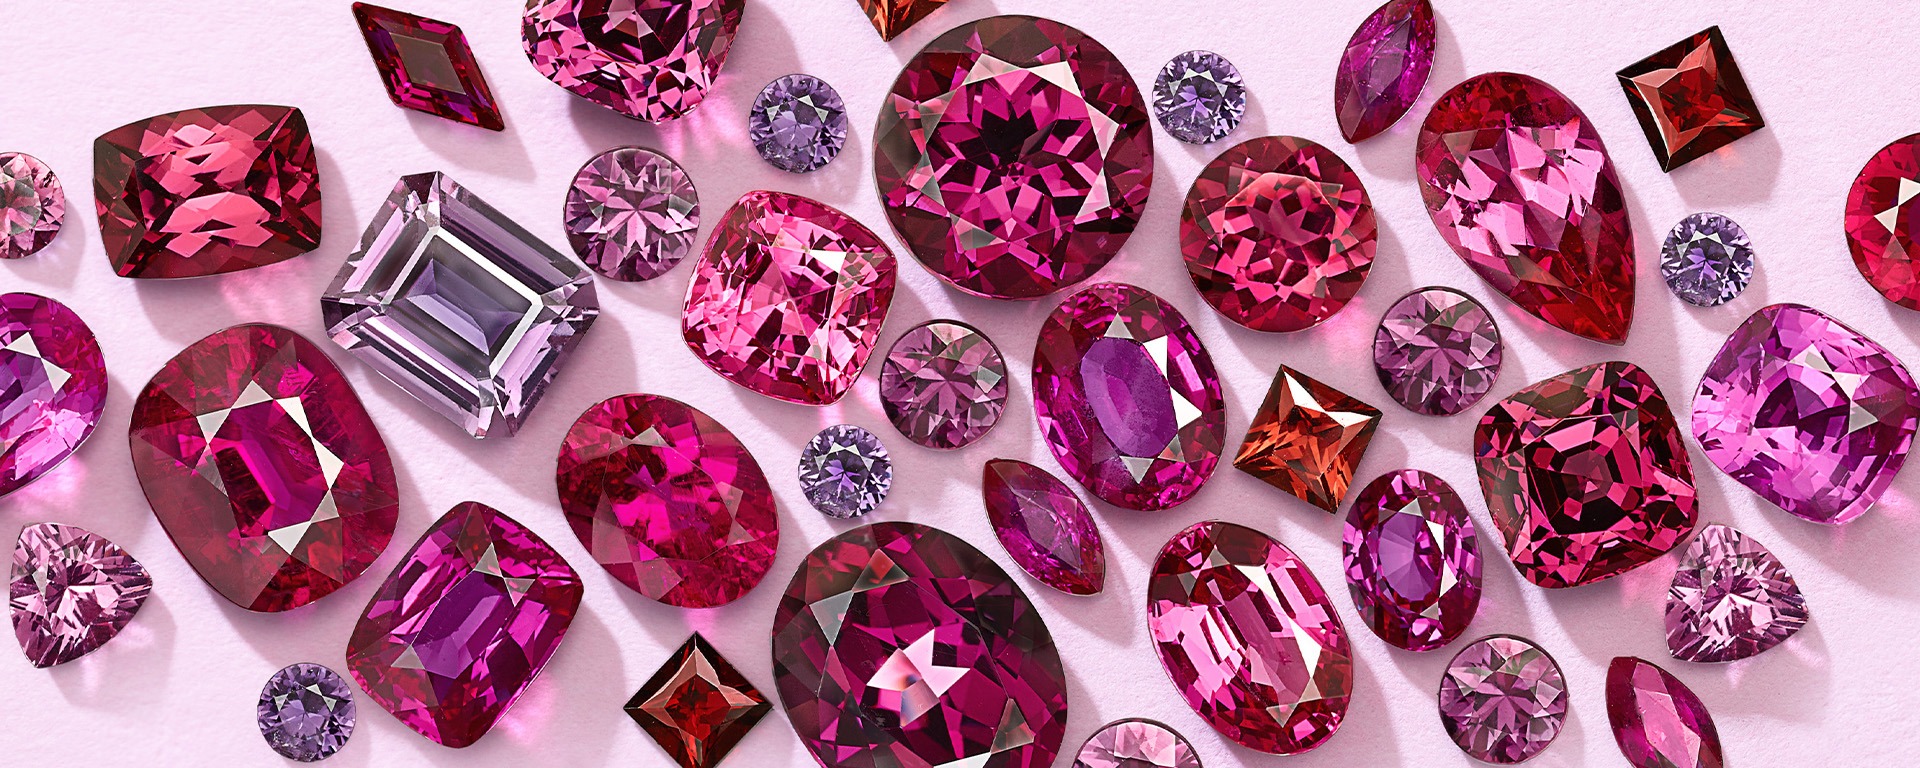 color of the year viva magenta gemstones